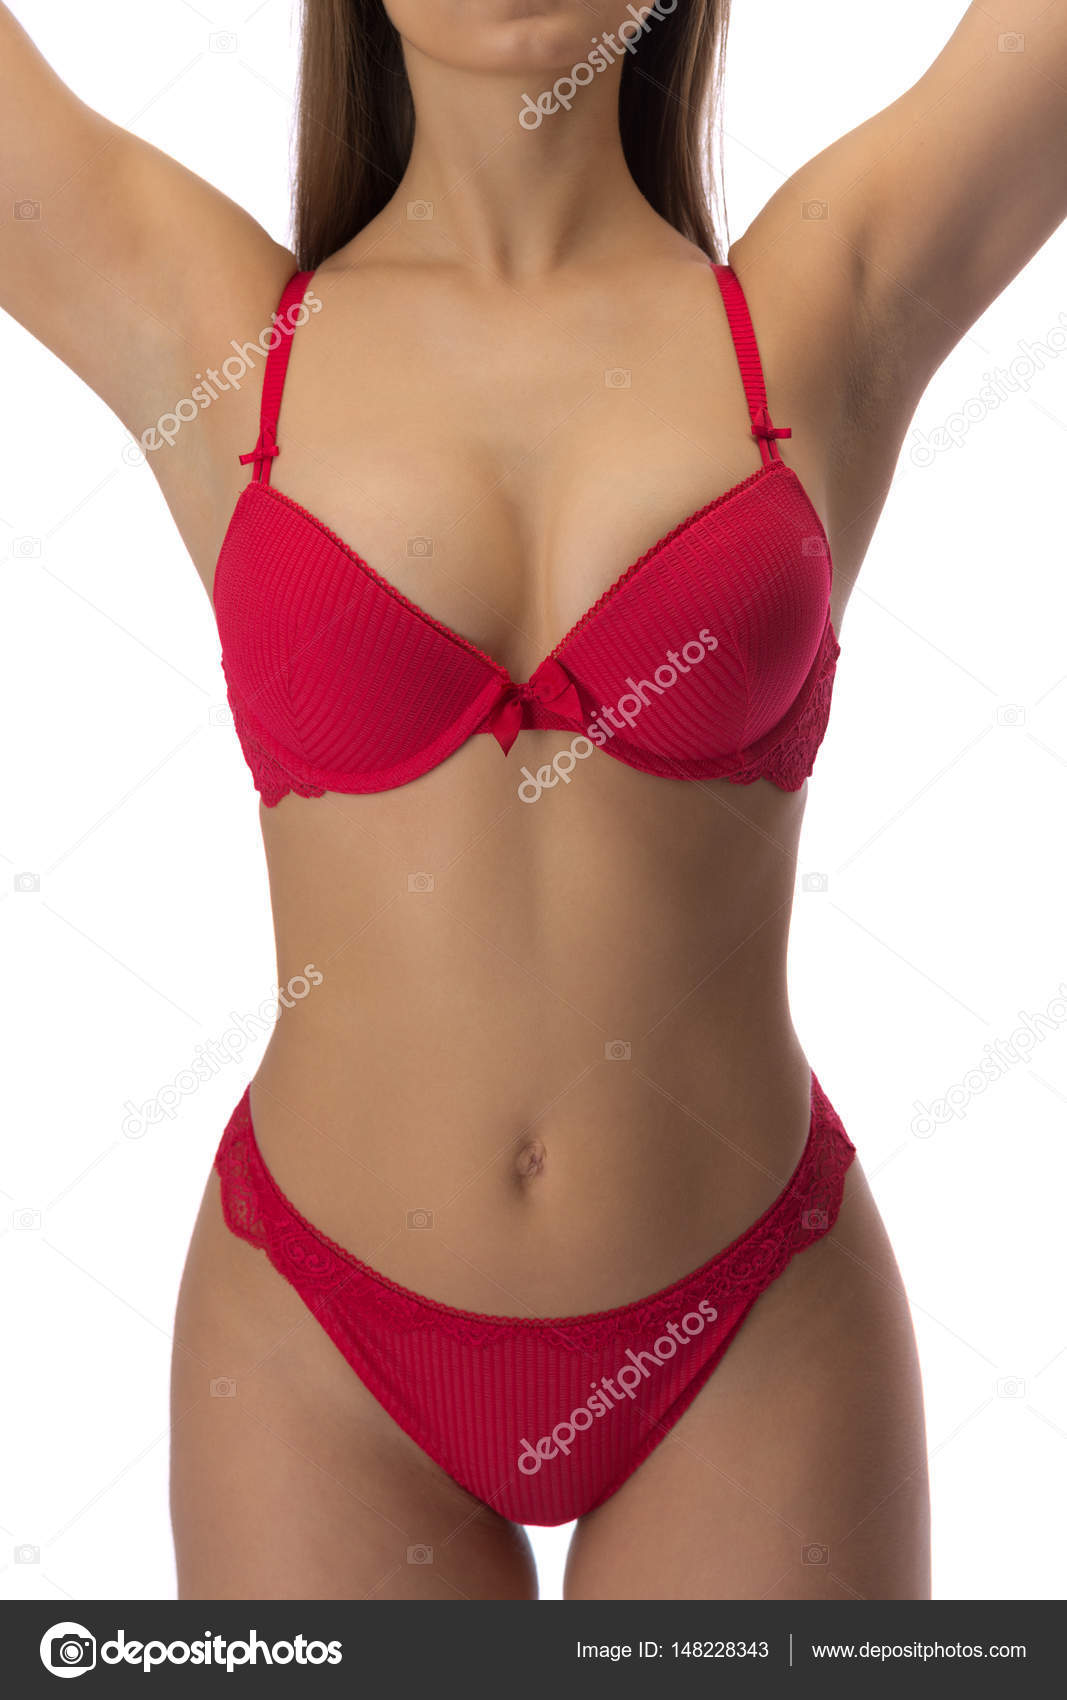 https://st3.depositphotos.com/1005901/14822/i/1600/depositphotos_148228343-stock-photo-young-girl-in-red-underwear.jpg